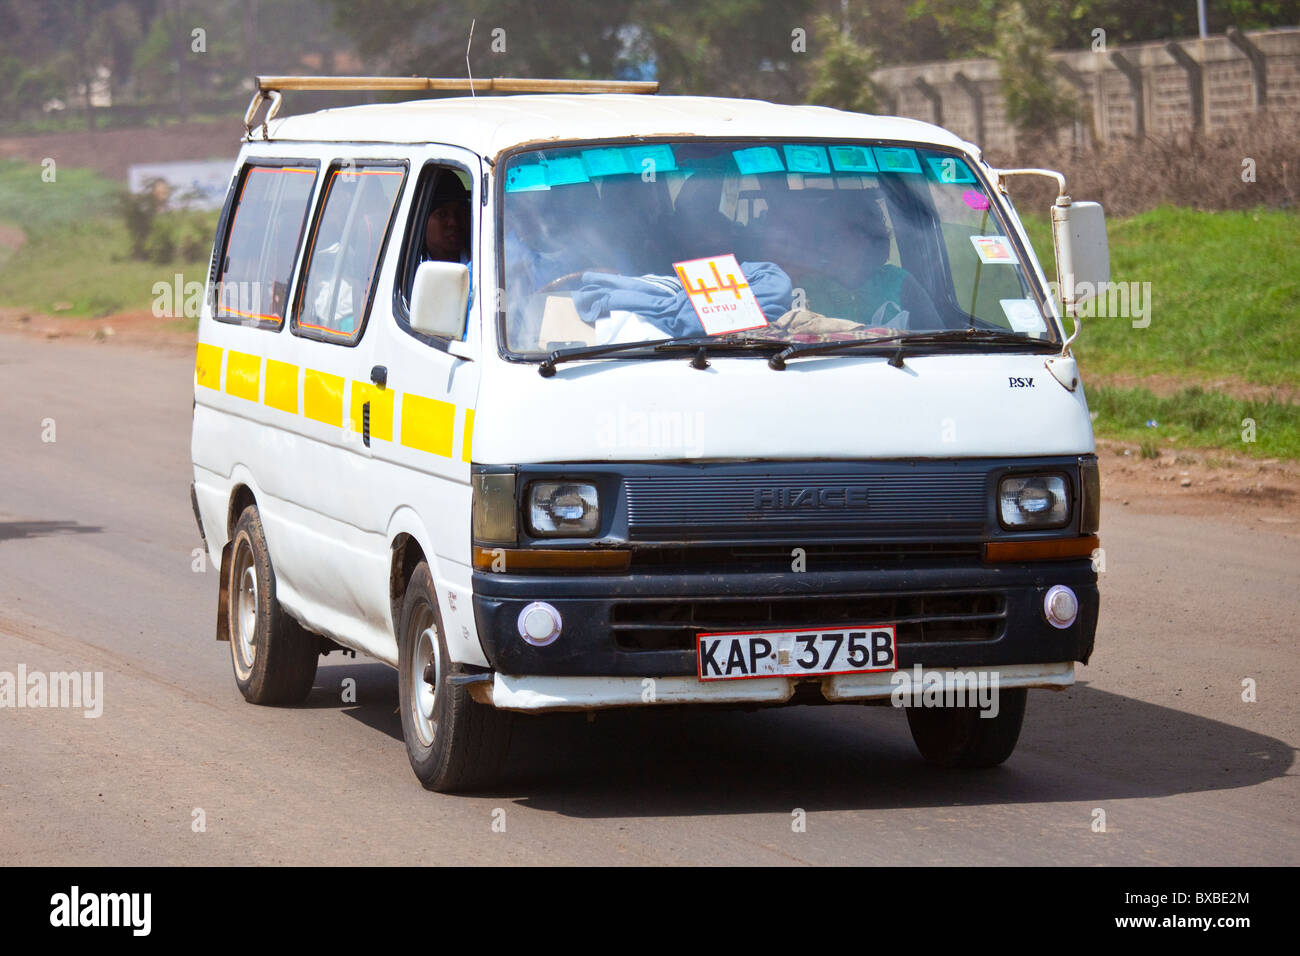 Matatu or minibus in Nairobi, Kenya Stock Photo